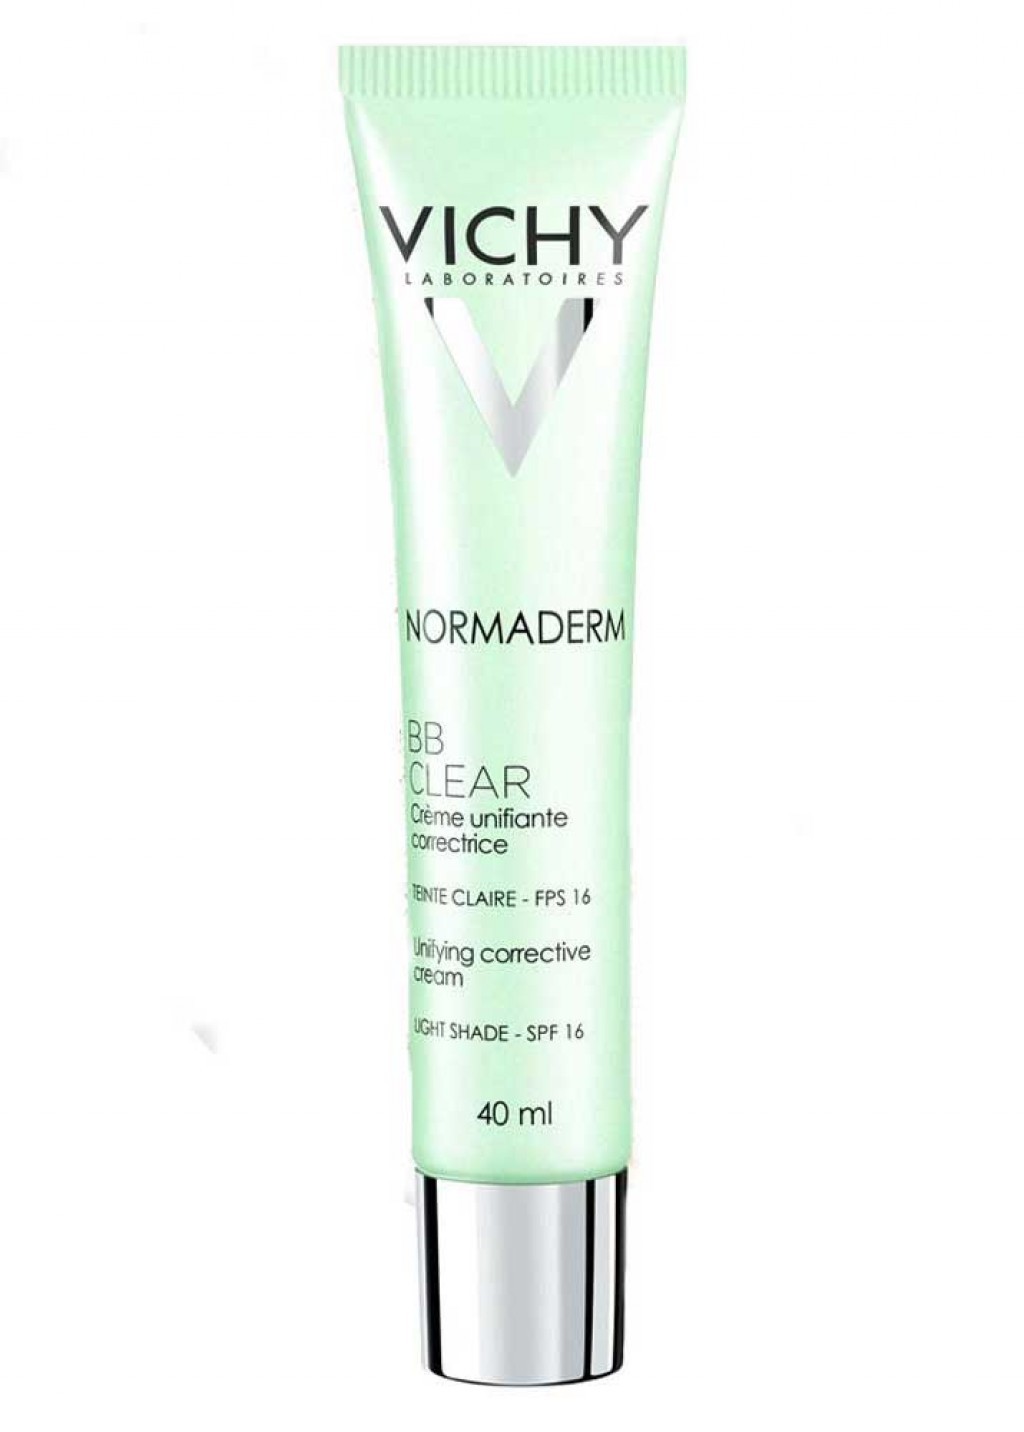 Privilegija saosjećati uništavanje  Vichy Normaderm BB Clear | Skin Care | BeautyAlmanac